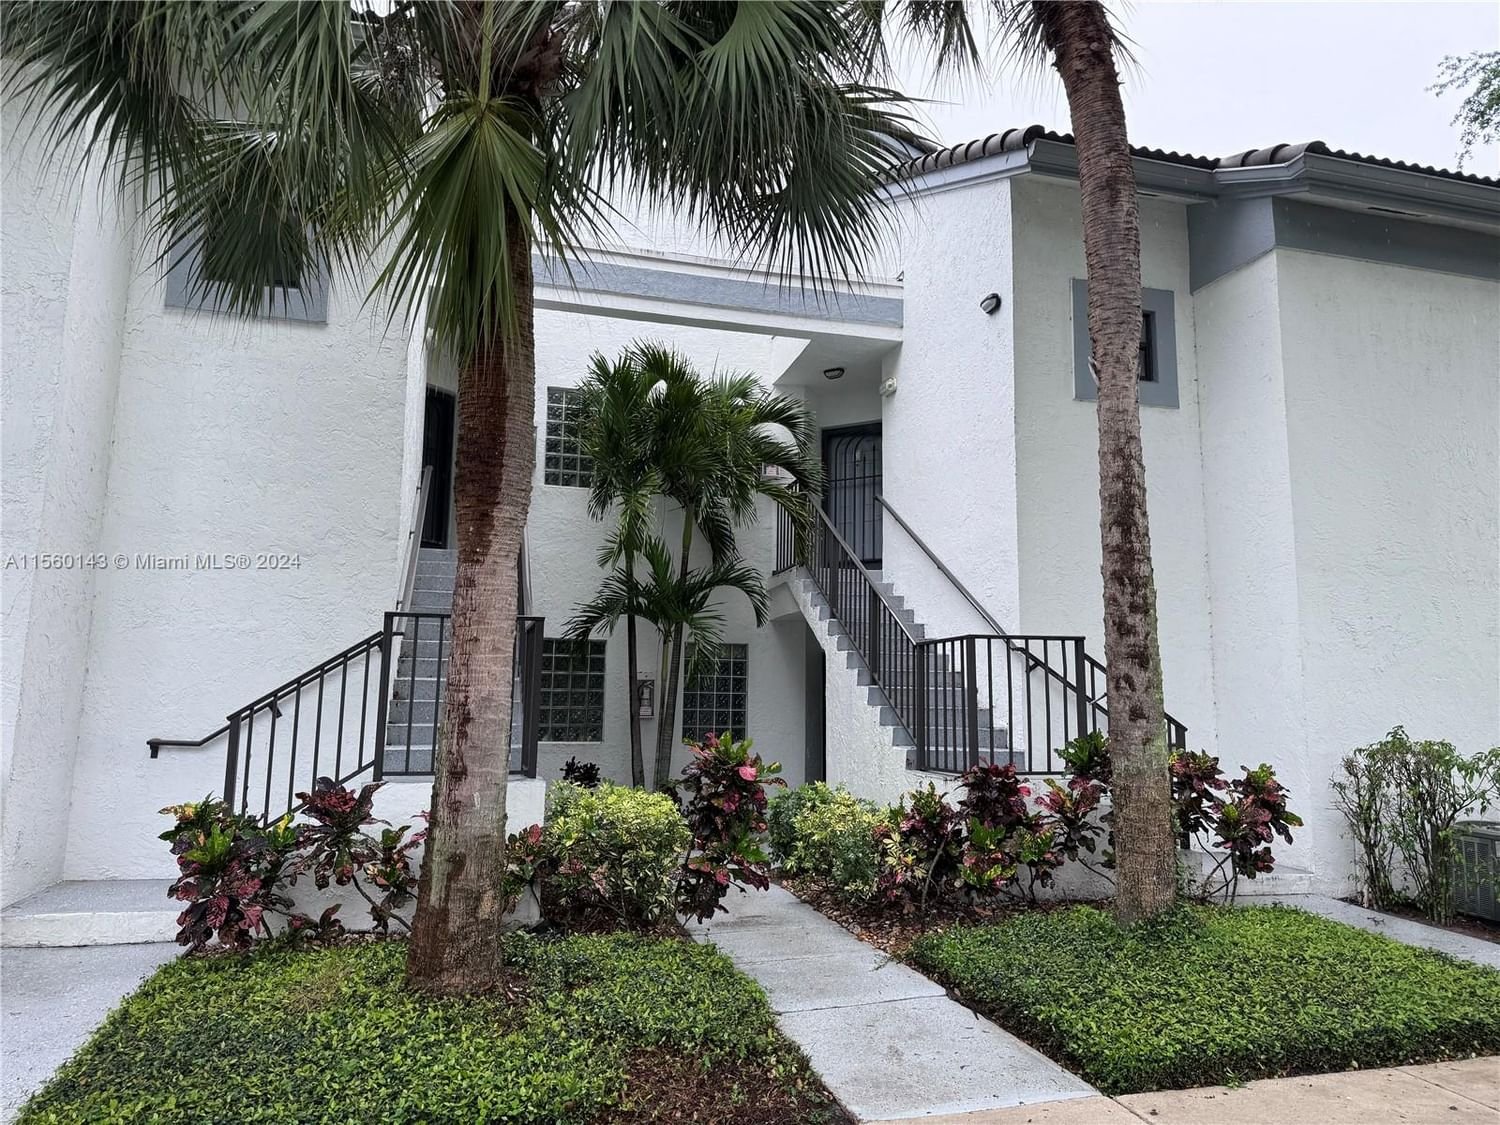 Real estate property located at 5395 Firenze Dr M, Palm Beach County, ALEXANDRA VILLAGE CONDO, Boynton Beach, FL